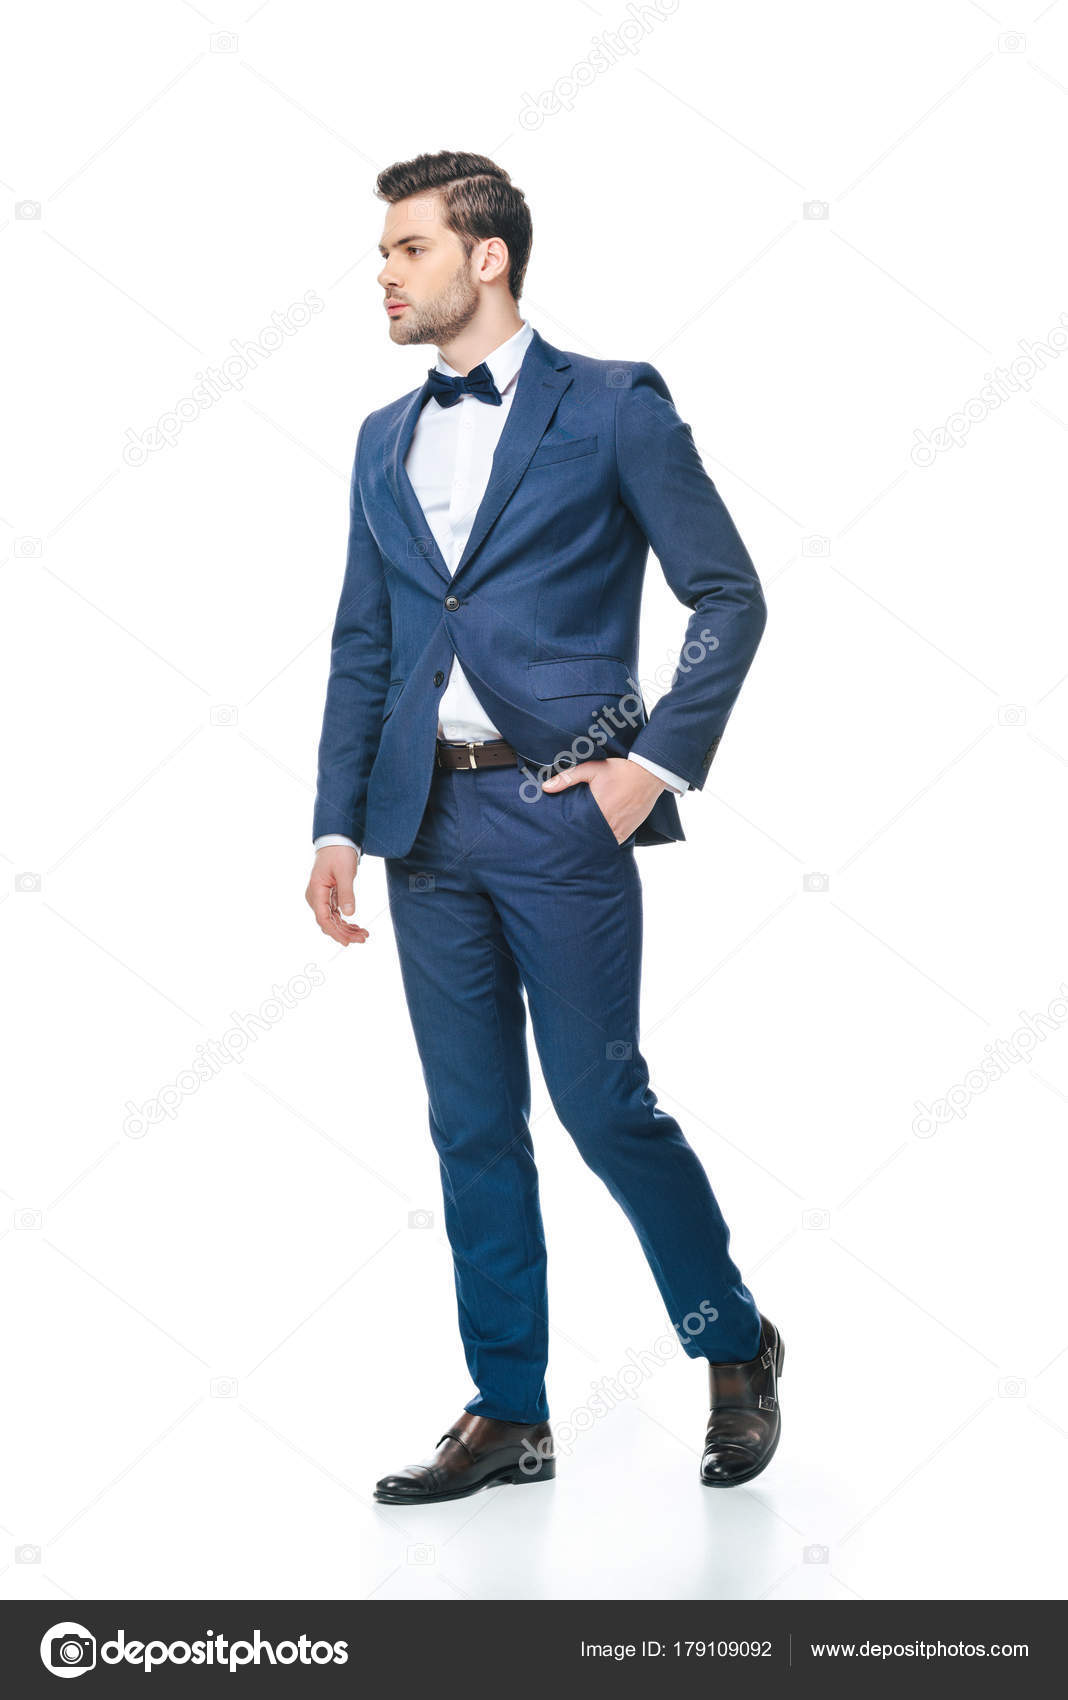 simple suit pose | Poses, Boy poses, Pantsuit